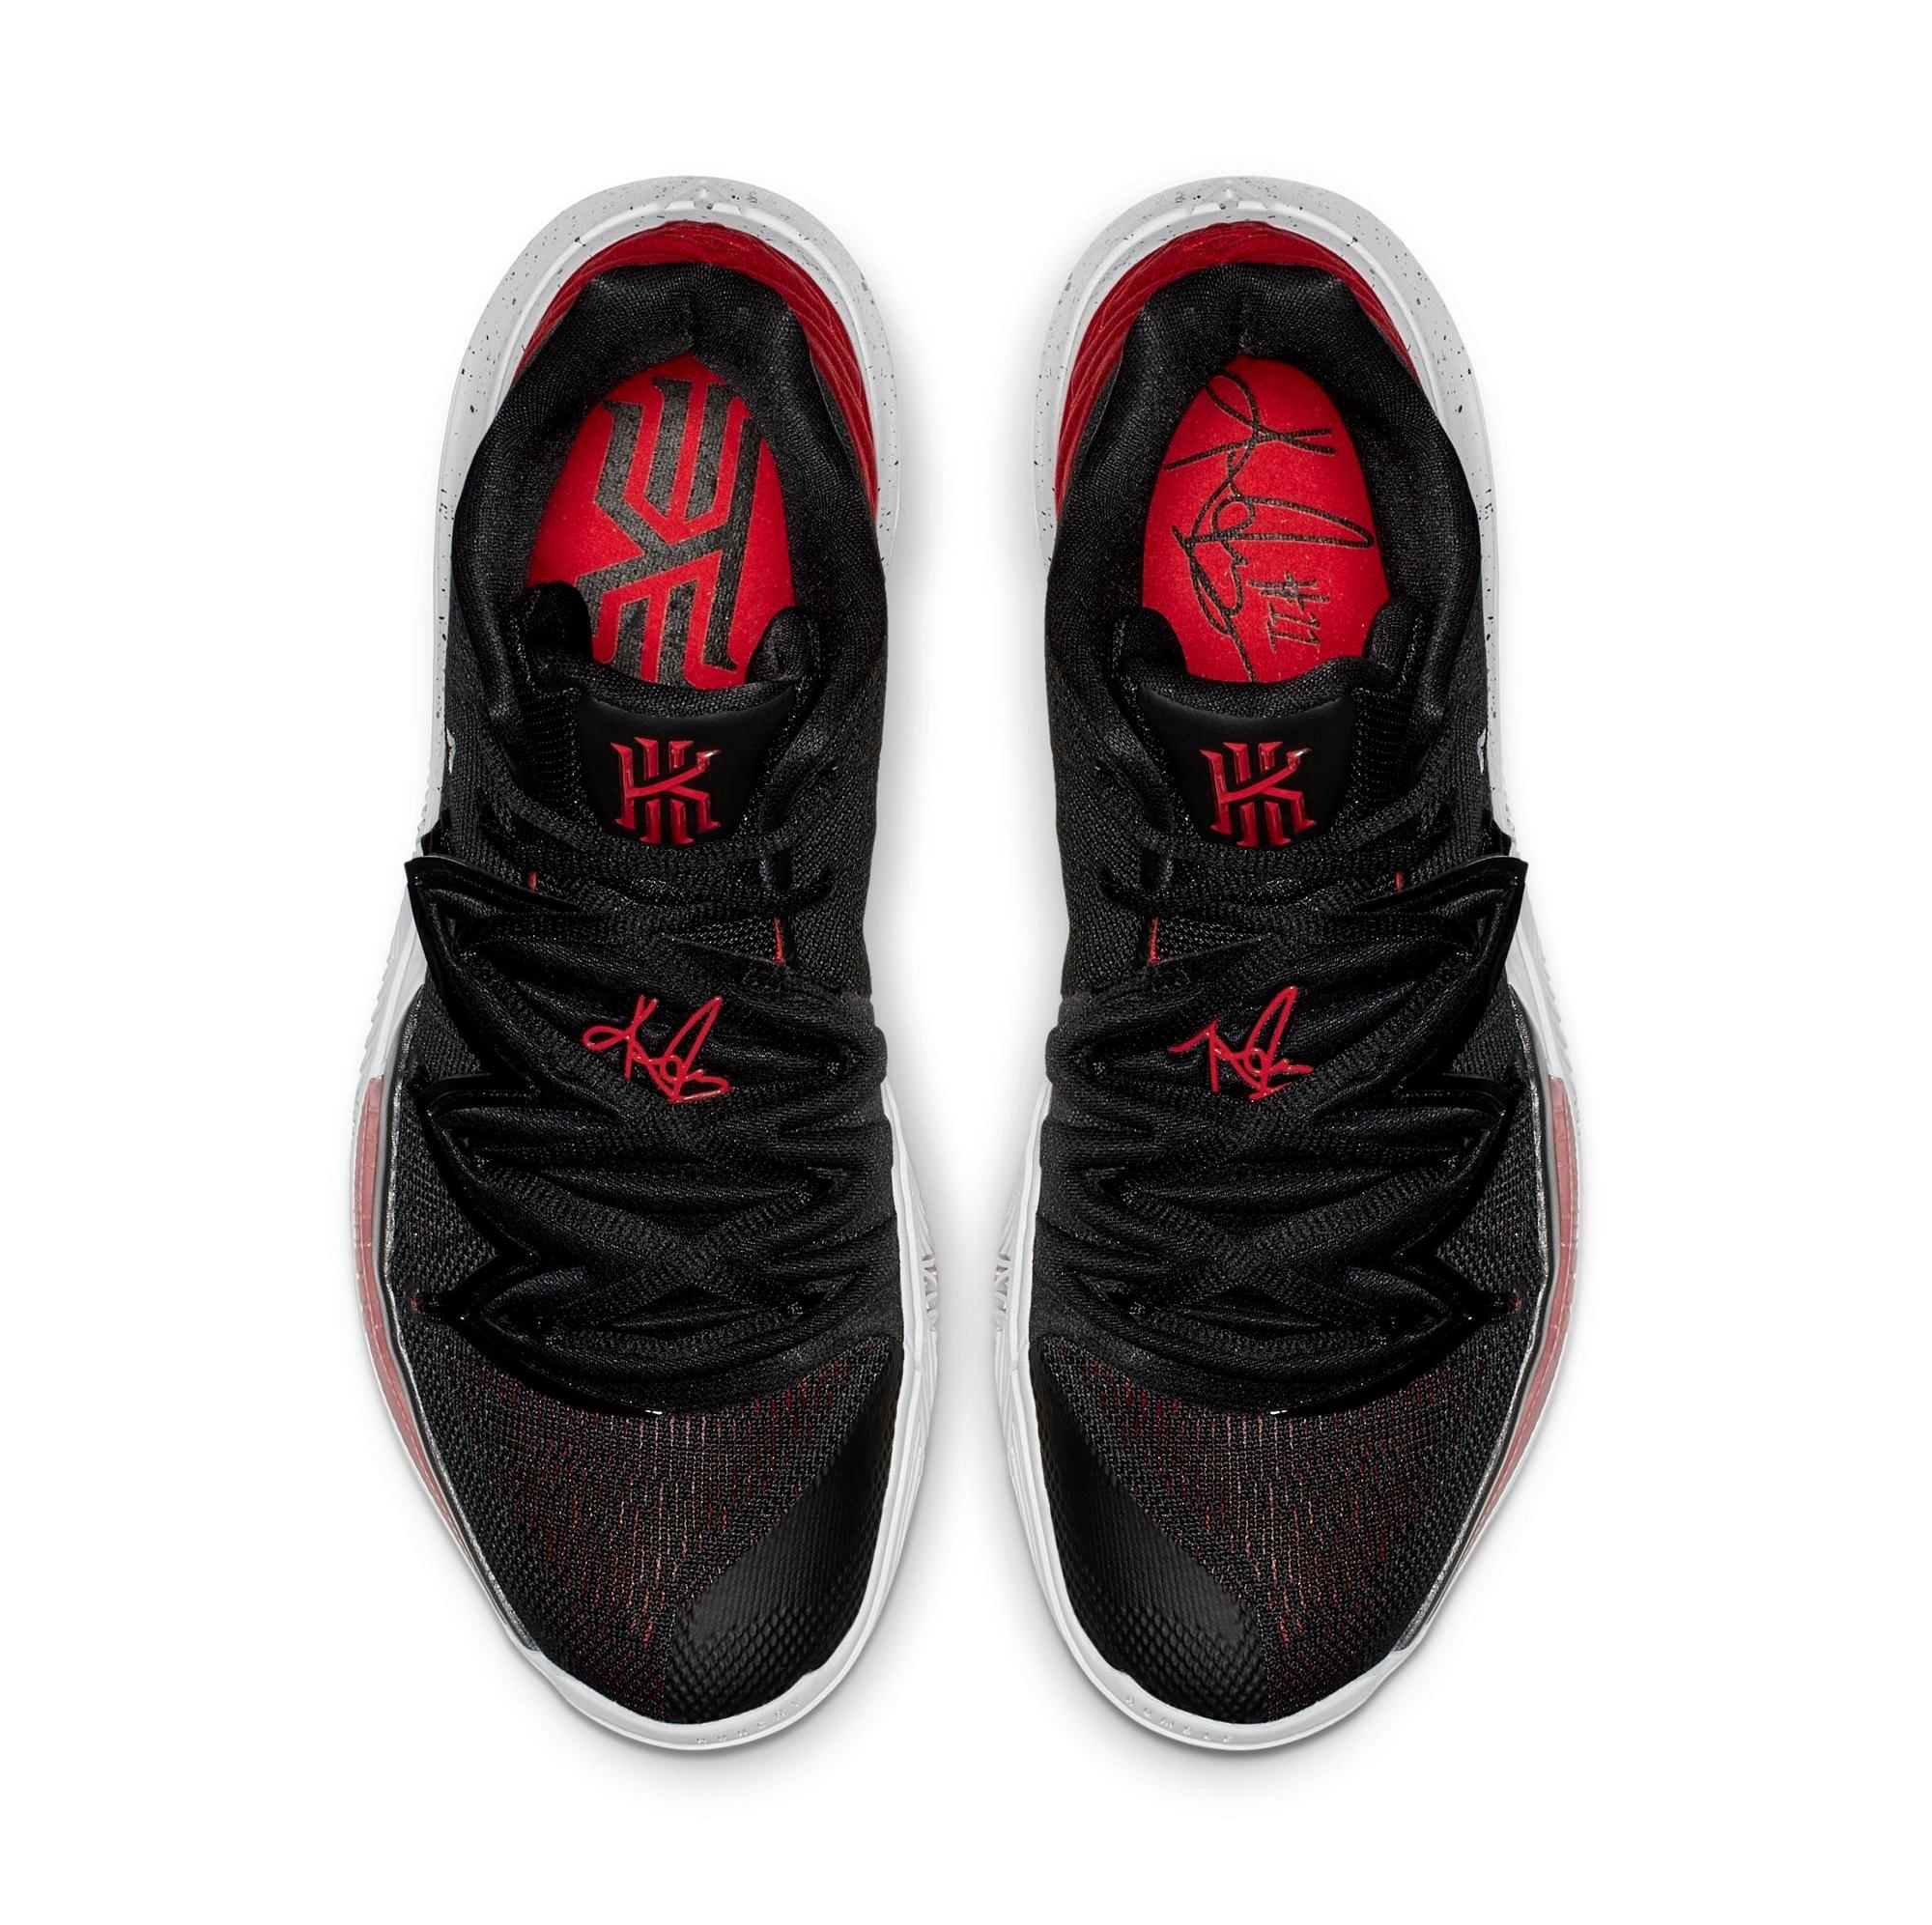 Sneakers Release – Nike Kyrie 5 “Black/Red” Basketball Shoe